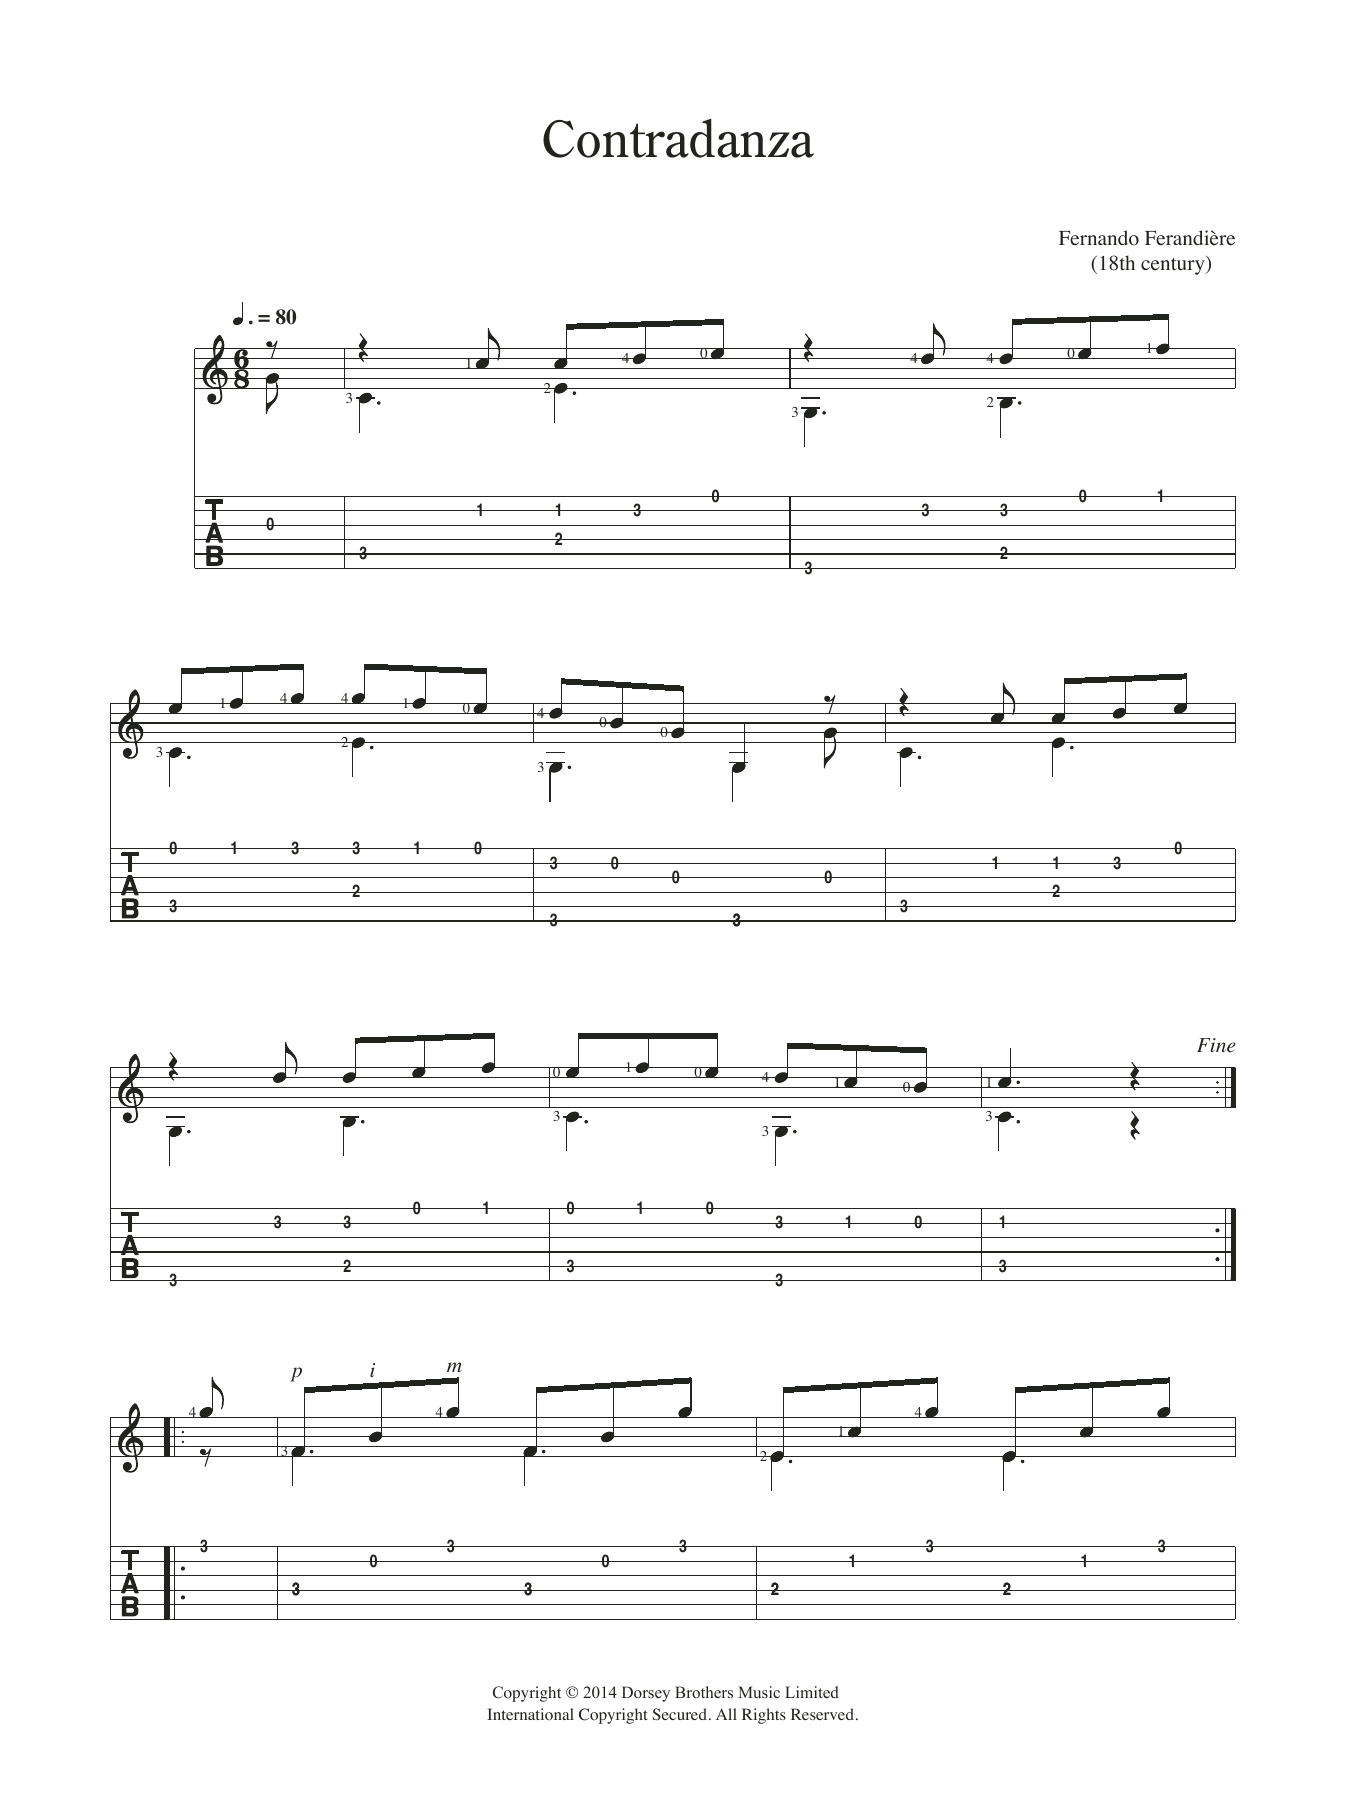 Fernando Ferandiere Contradanza Sheet Music Notes & Chords for Guitar - Download or Print PDF